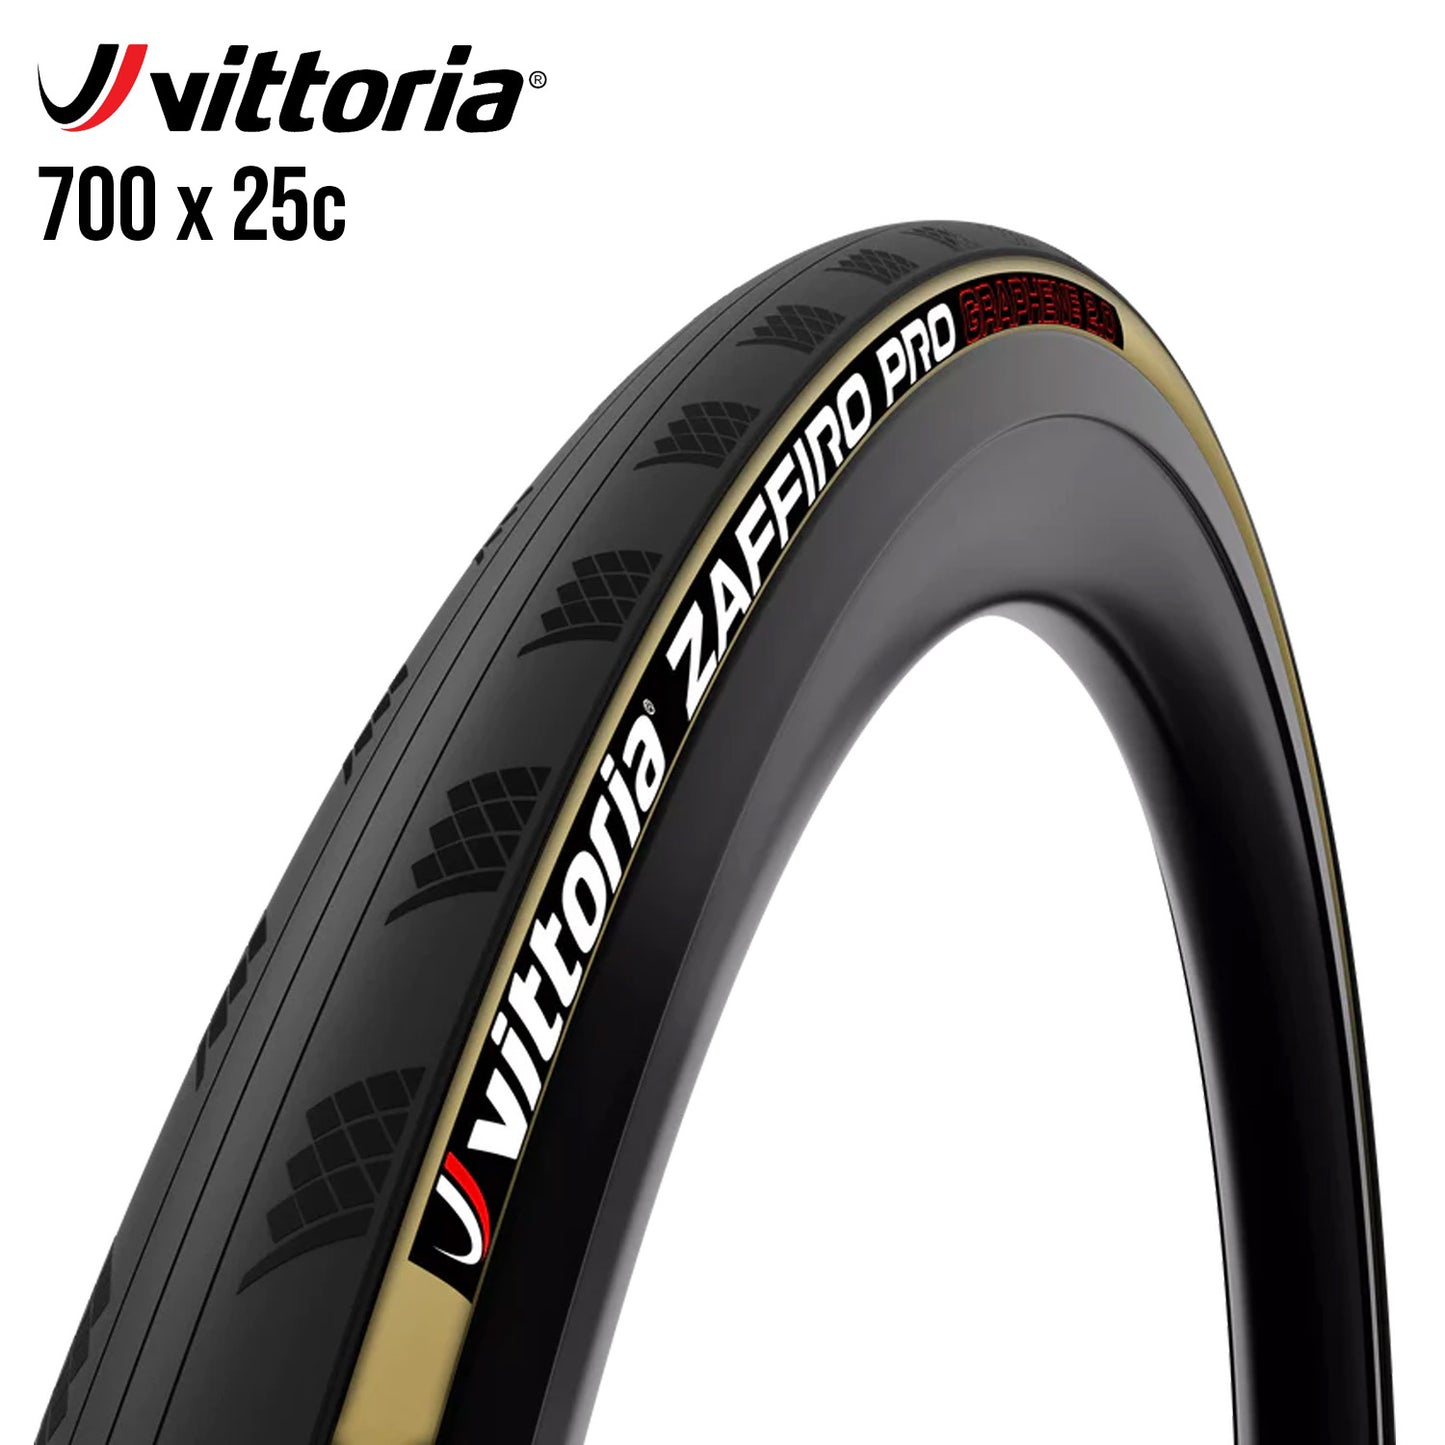 Vittoria Zaffiro Pro Road Tube-Type Bike Tire - Tan Wall